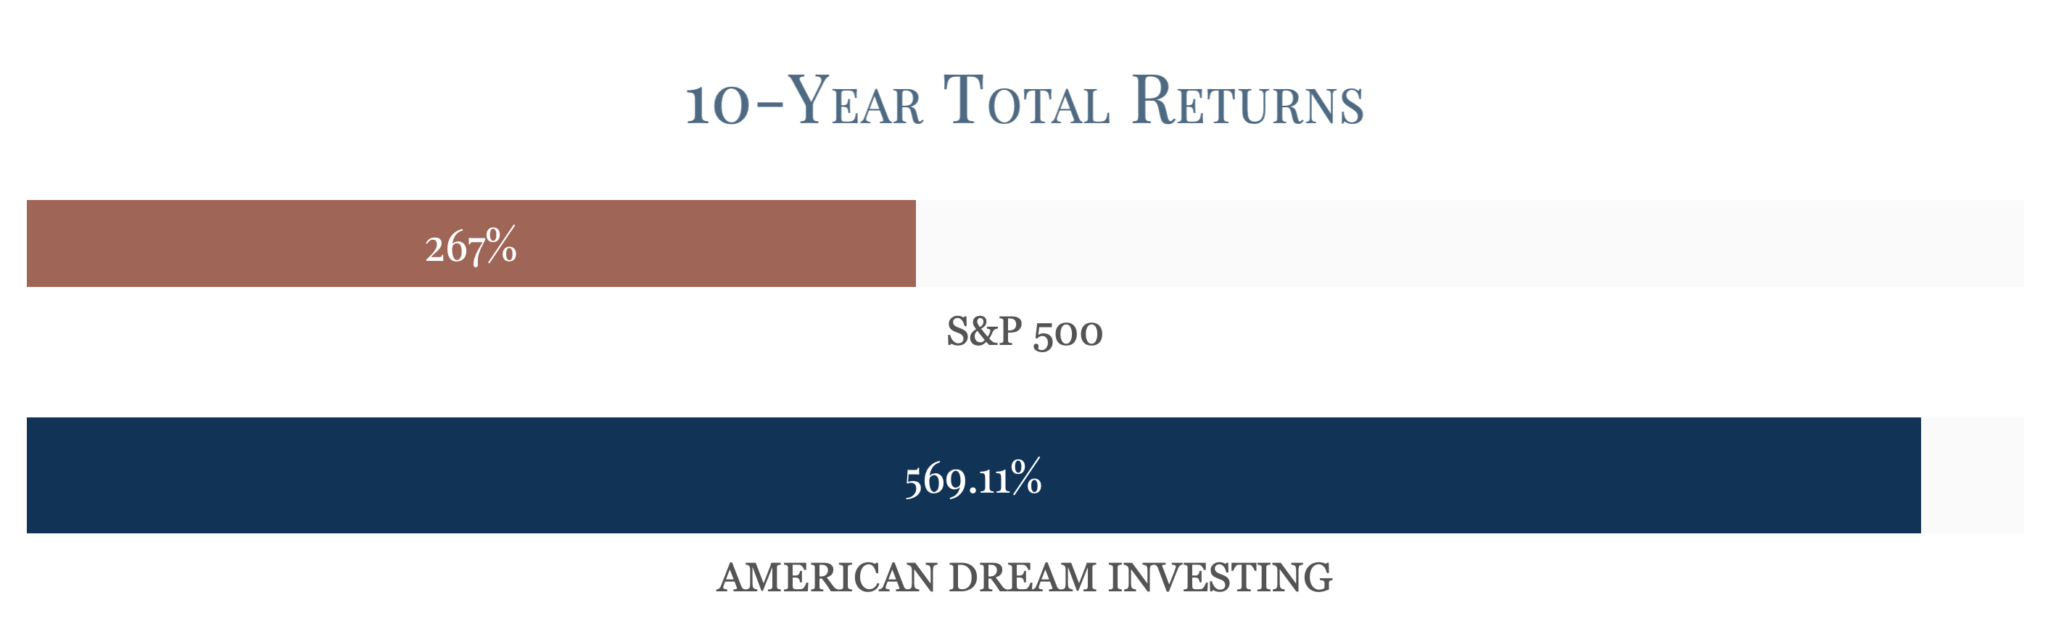 American Dream Investing 10 Year Returns 2011-2021